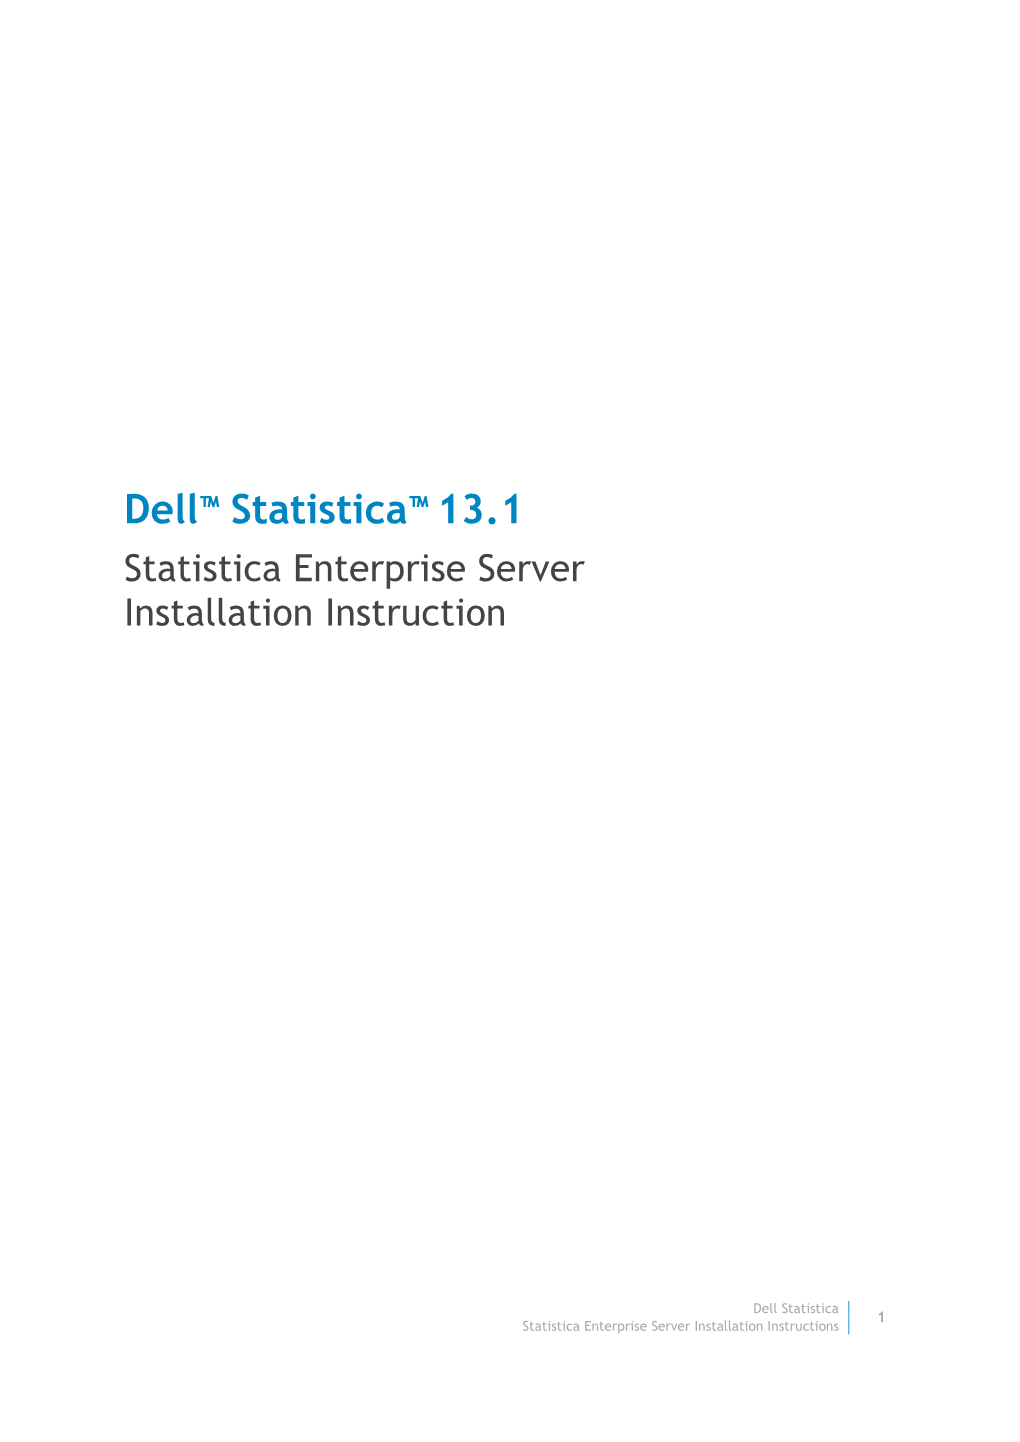 Dell™ Statistica™ 13.1 Statistica Enterprise Server Installation Instruction